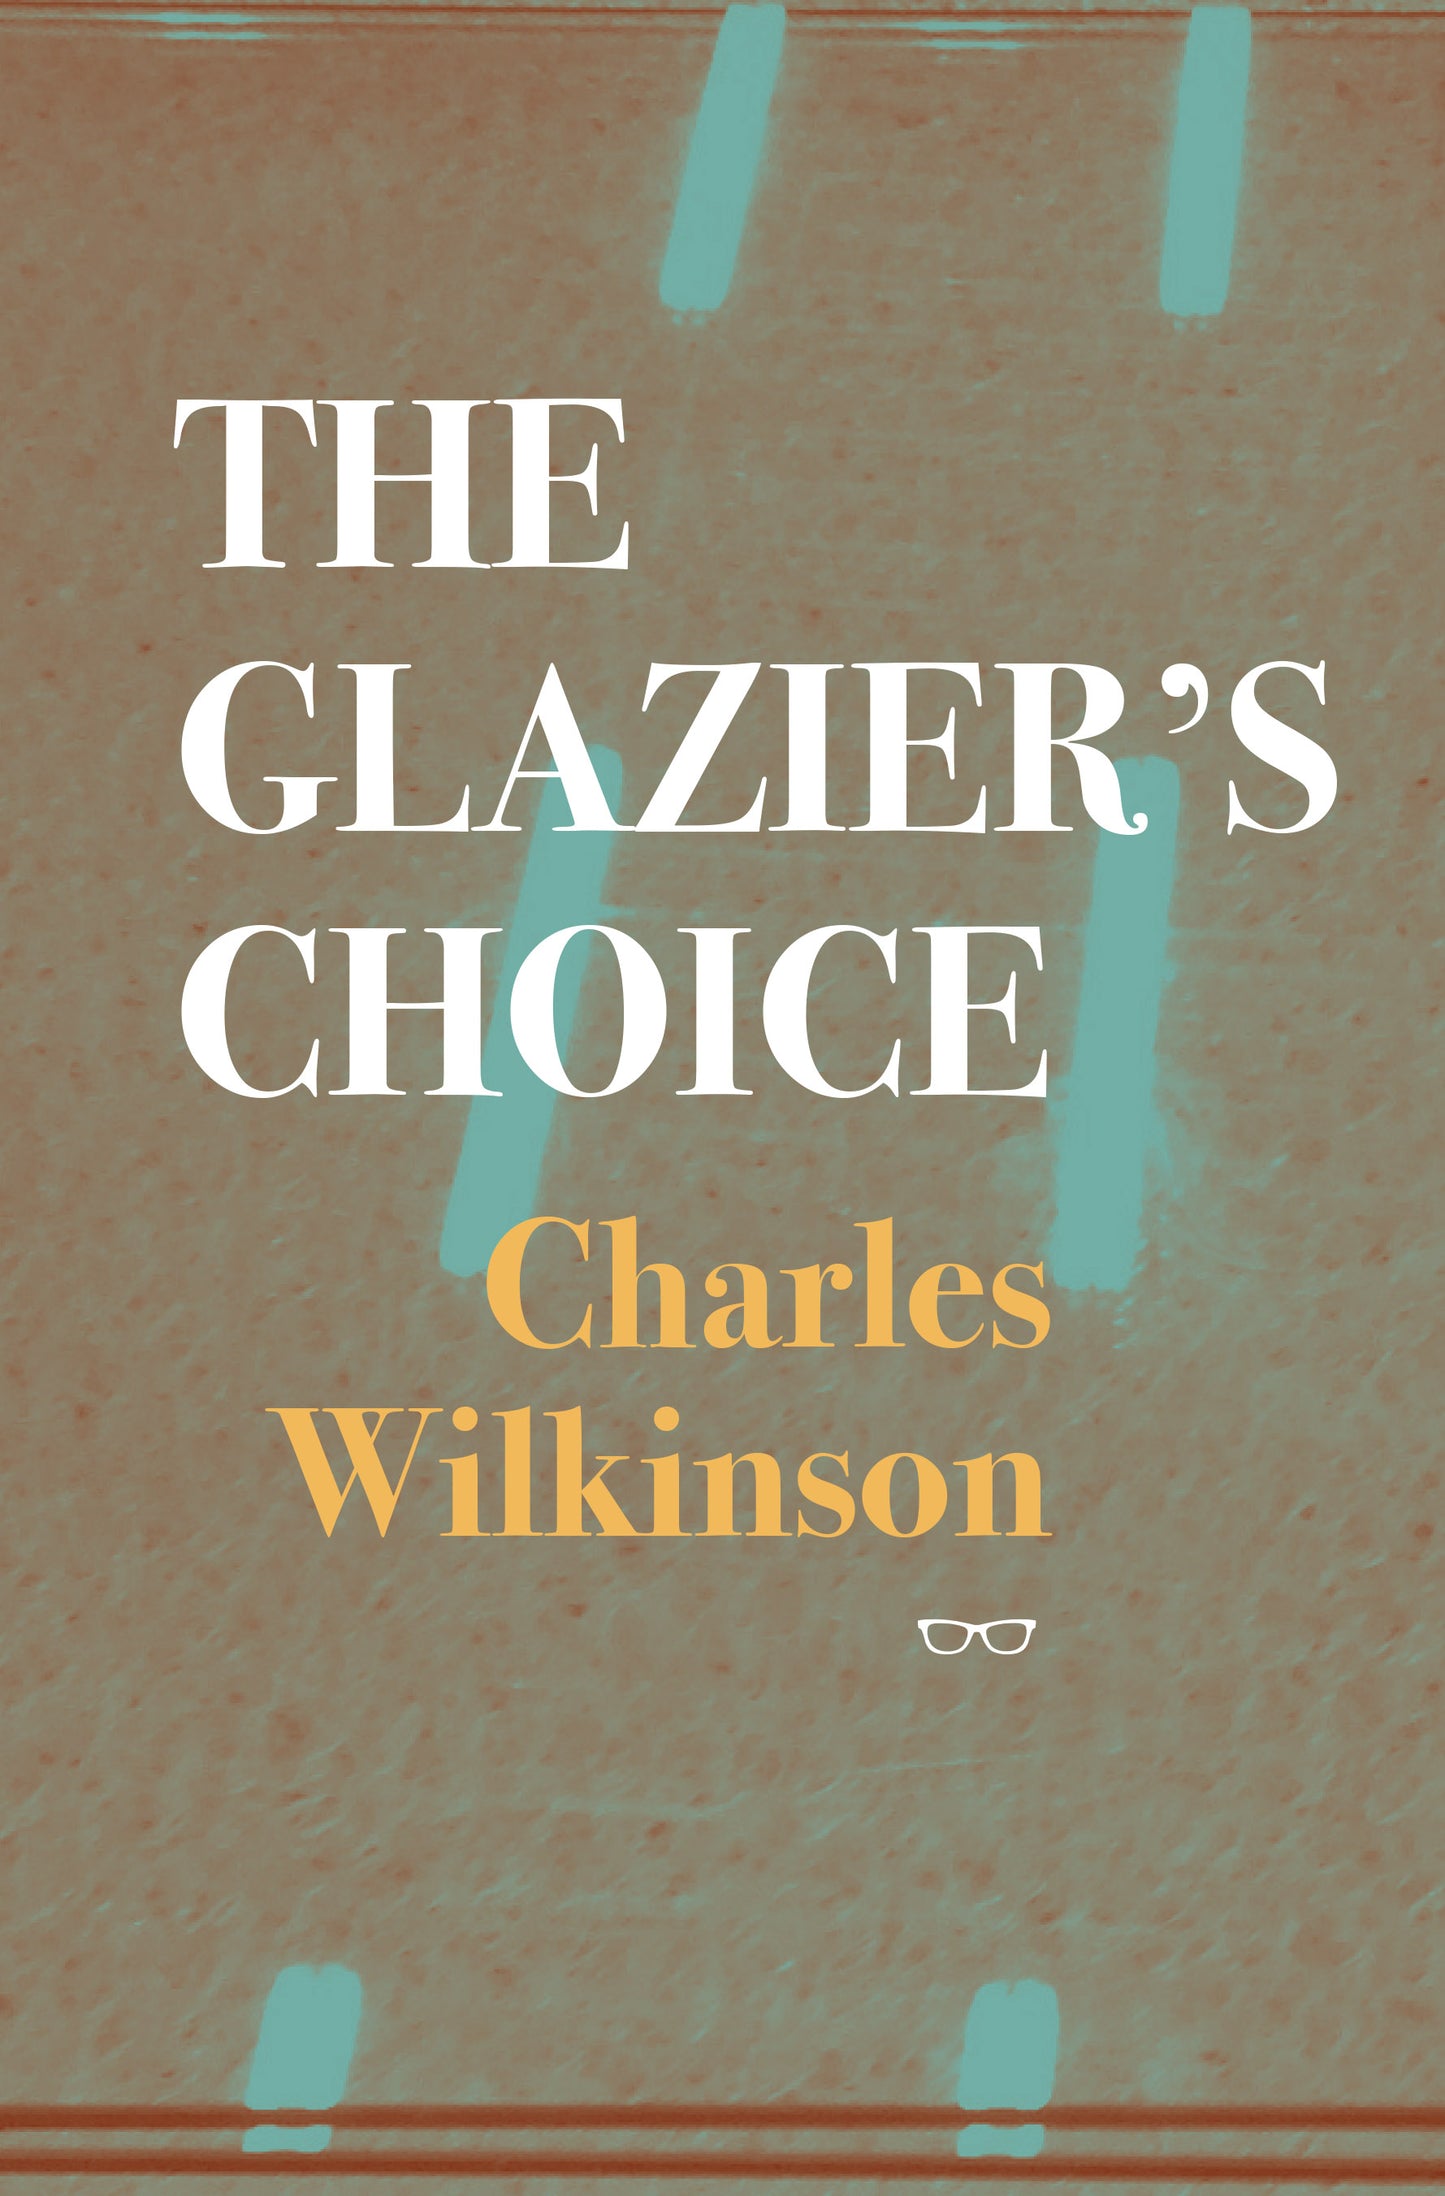 The Glazier's Choice